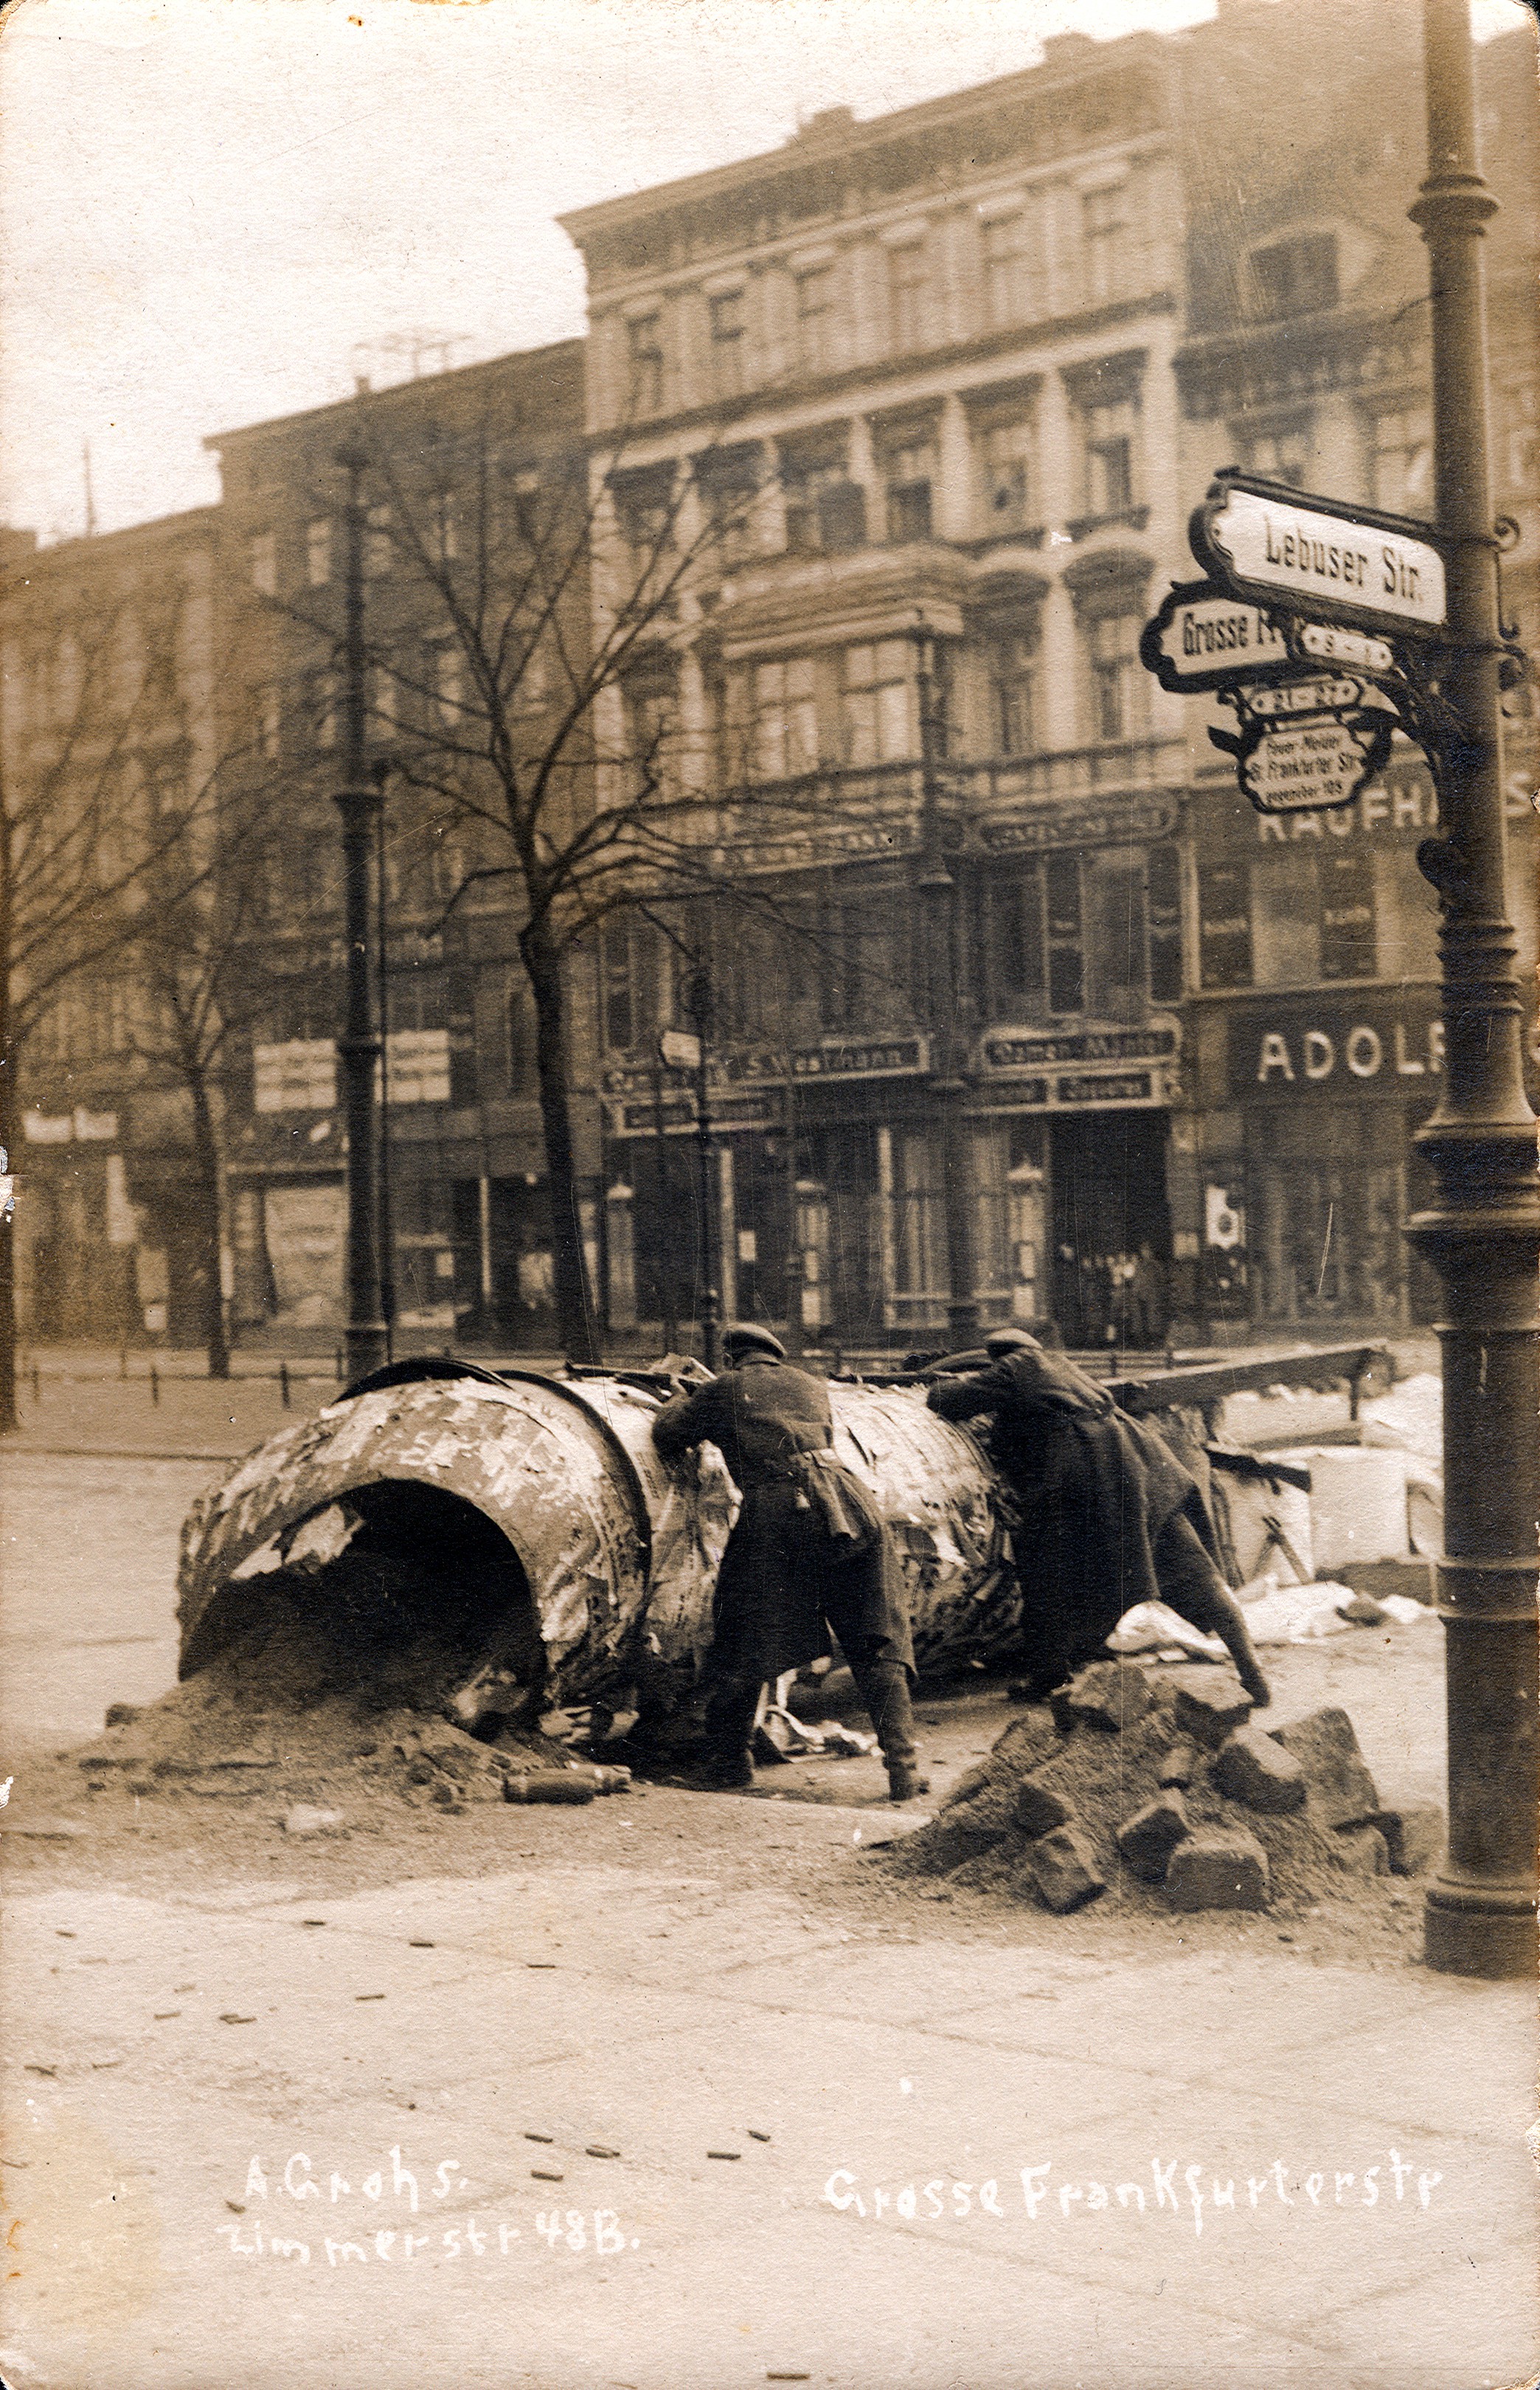 Barricade à Berlin durant le soulèvement spartakiste, en janvier 1919 (Source : https://www.wikiwand.com/fr/R%C3%A9volte_spartakiste_de_Berlin )